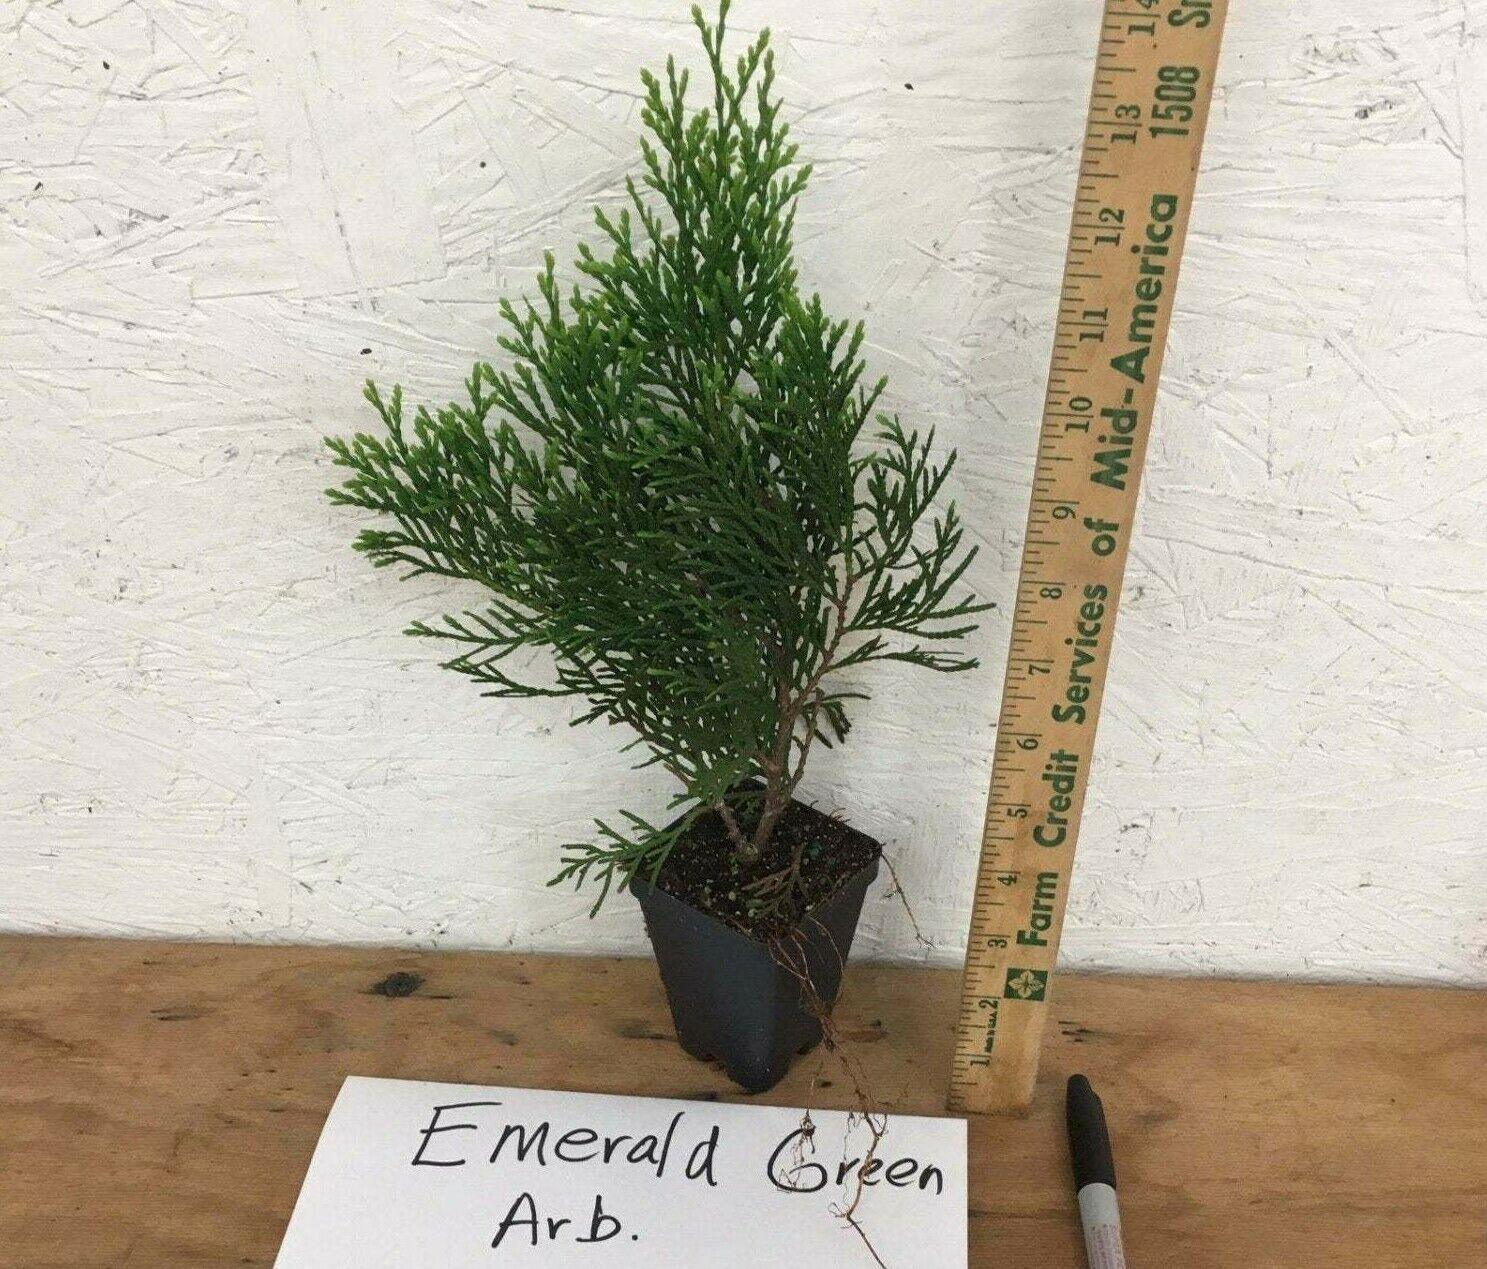 25 Emerald Green Arborvitae/White Cedar Trees/Shrubs - 6-12" Tall - 2.5" Pot - The Nursery Center